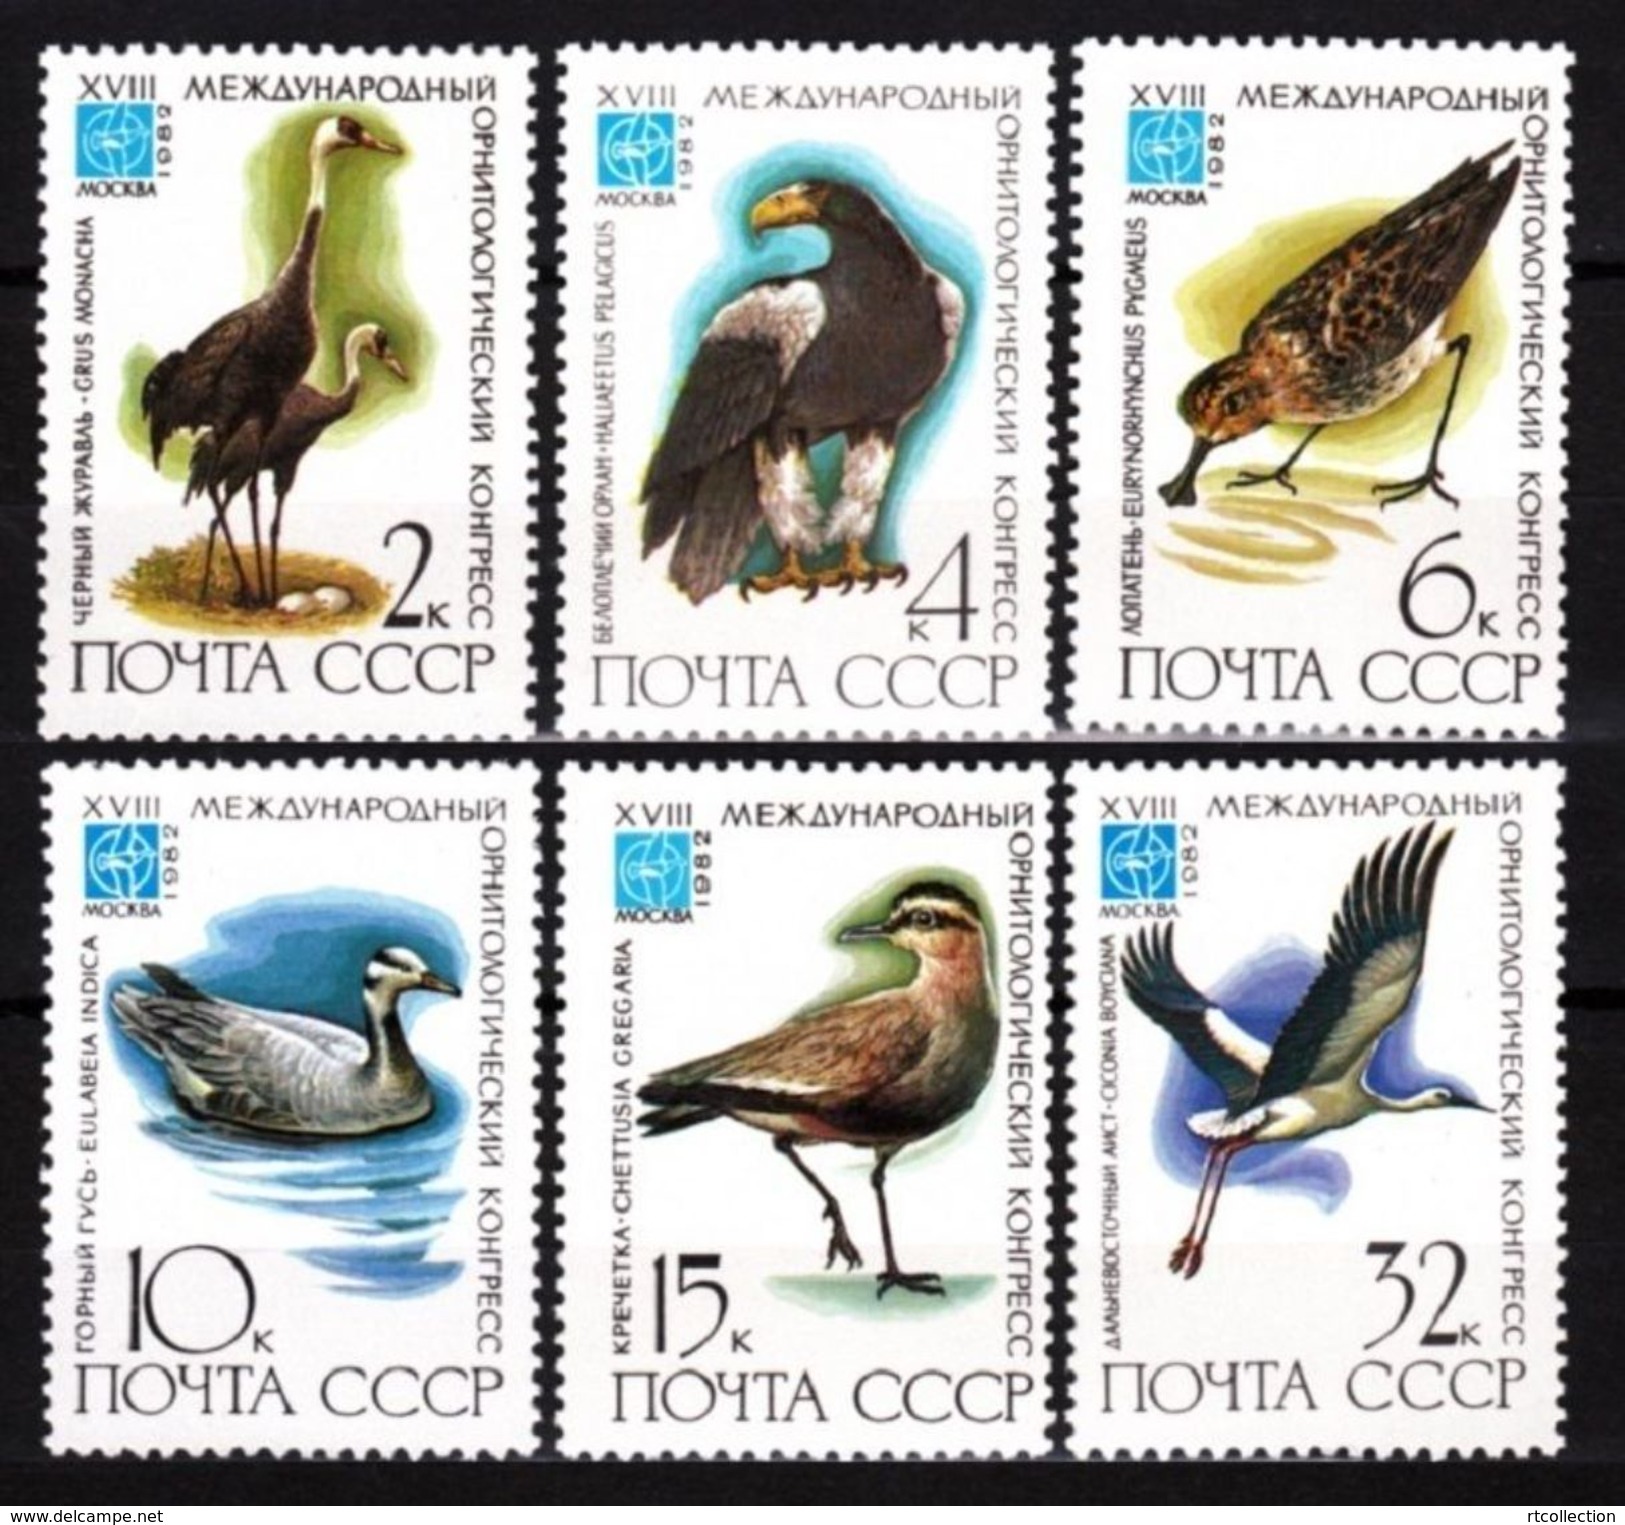 USSR Russia 1982 - 18th Ornithological Congress Moscow Birds Of Prey Animals Bird Eagles Ducks Stamps MNH Mi 5181-86 - Eagles & Birds Of Prey